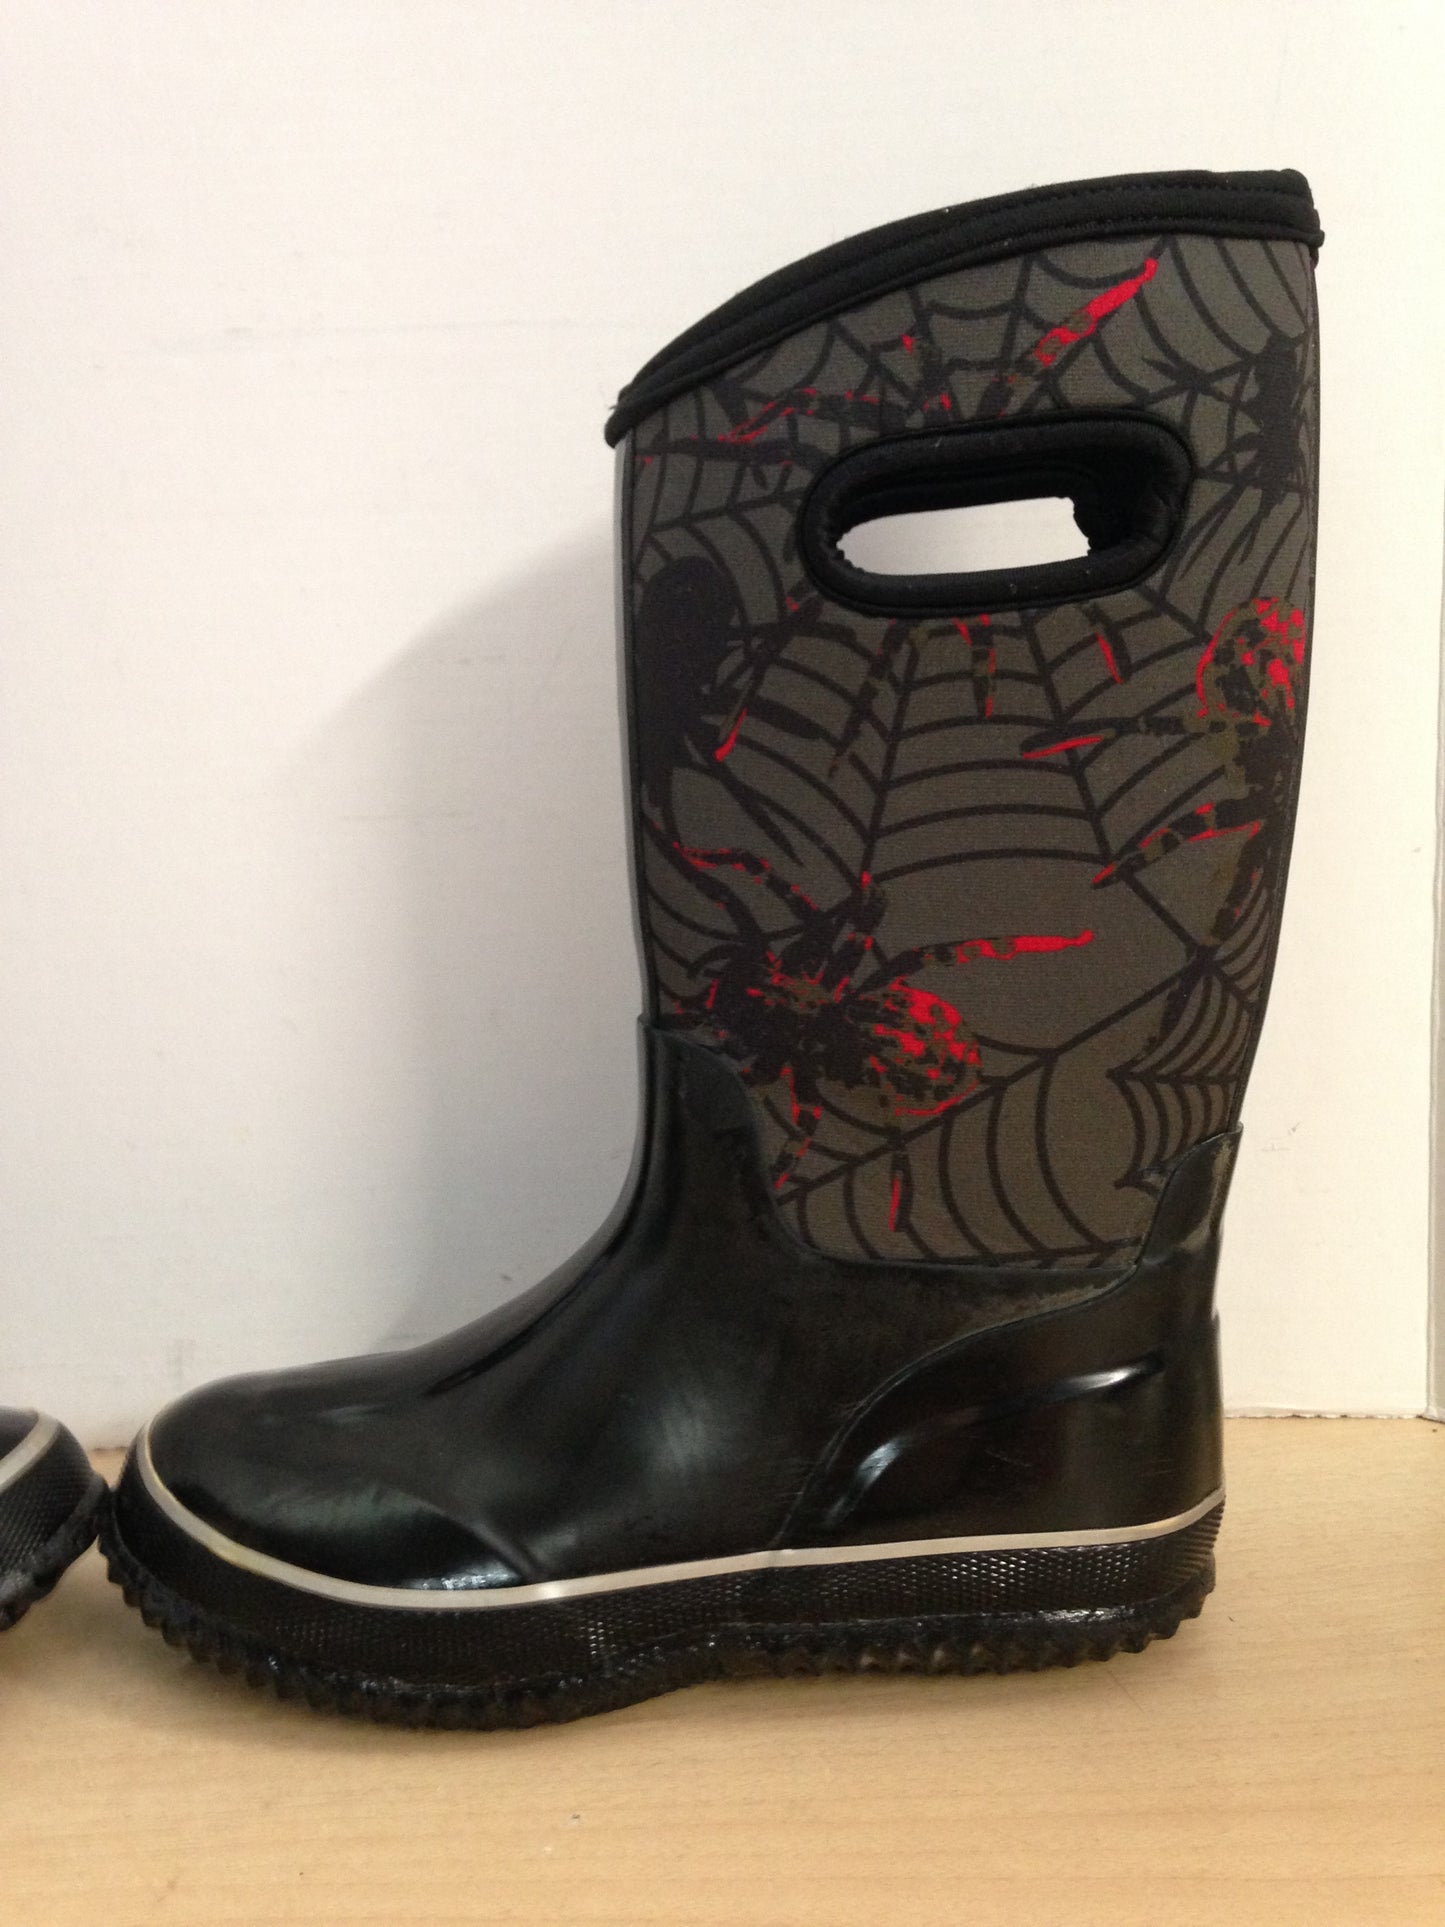 Bogs Style Child Size 2 Spider Neoprene Rubber Rain Winter Boots Black